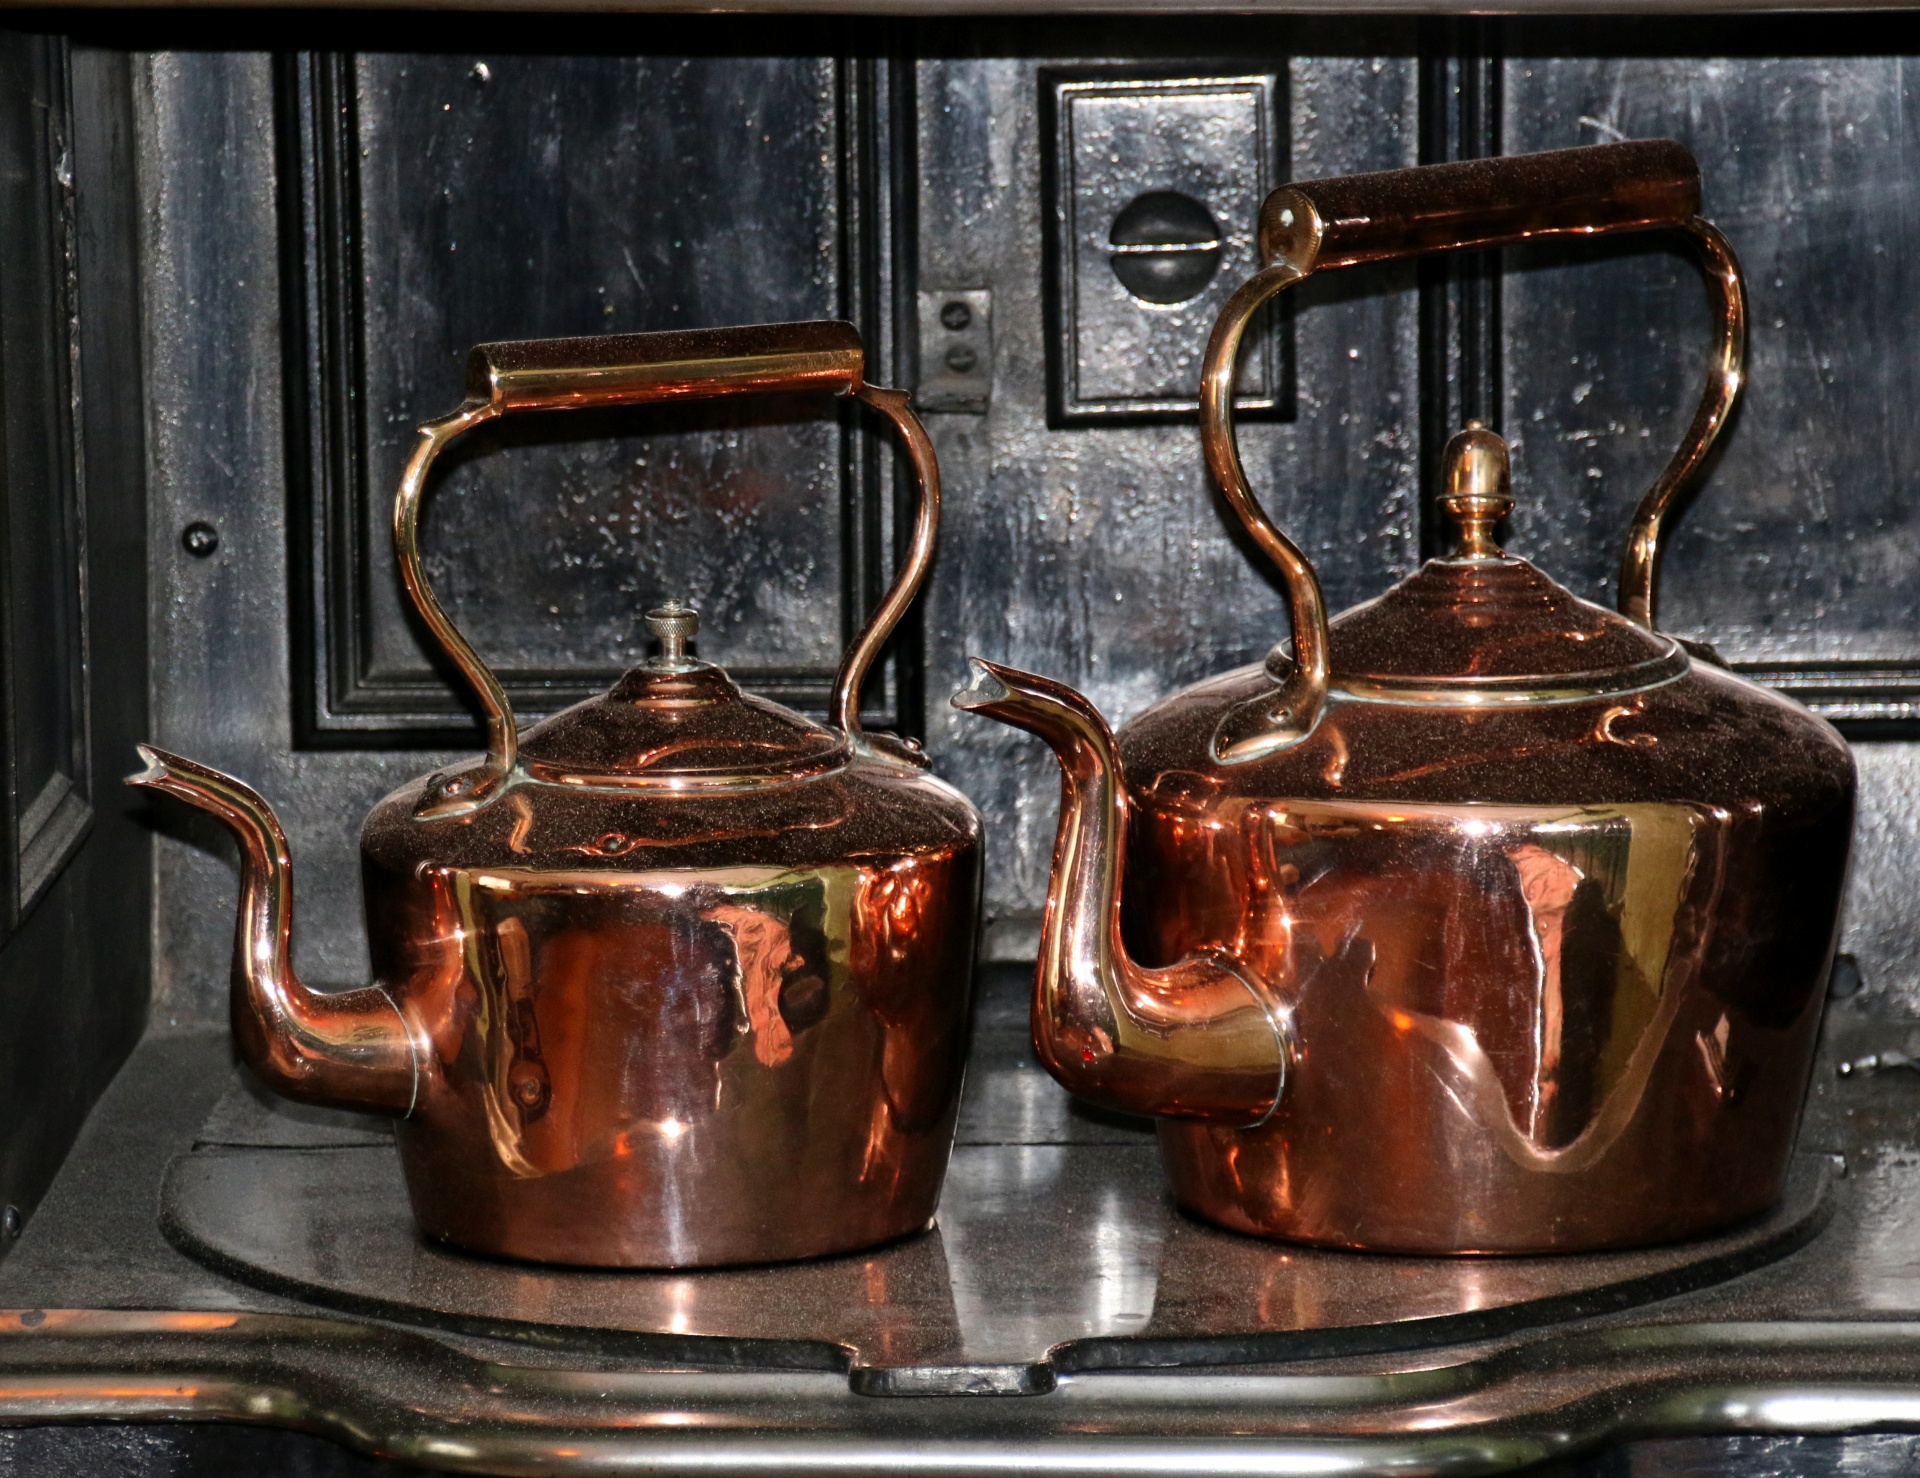 Copper kettles on an old coal range